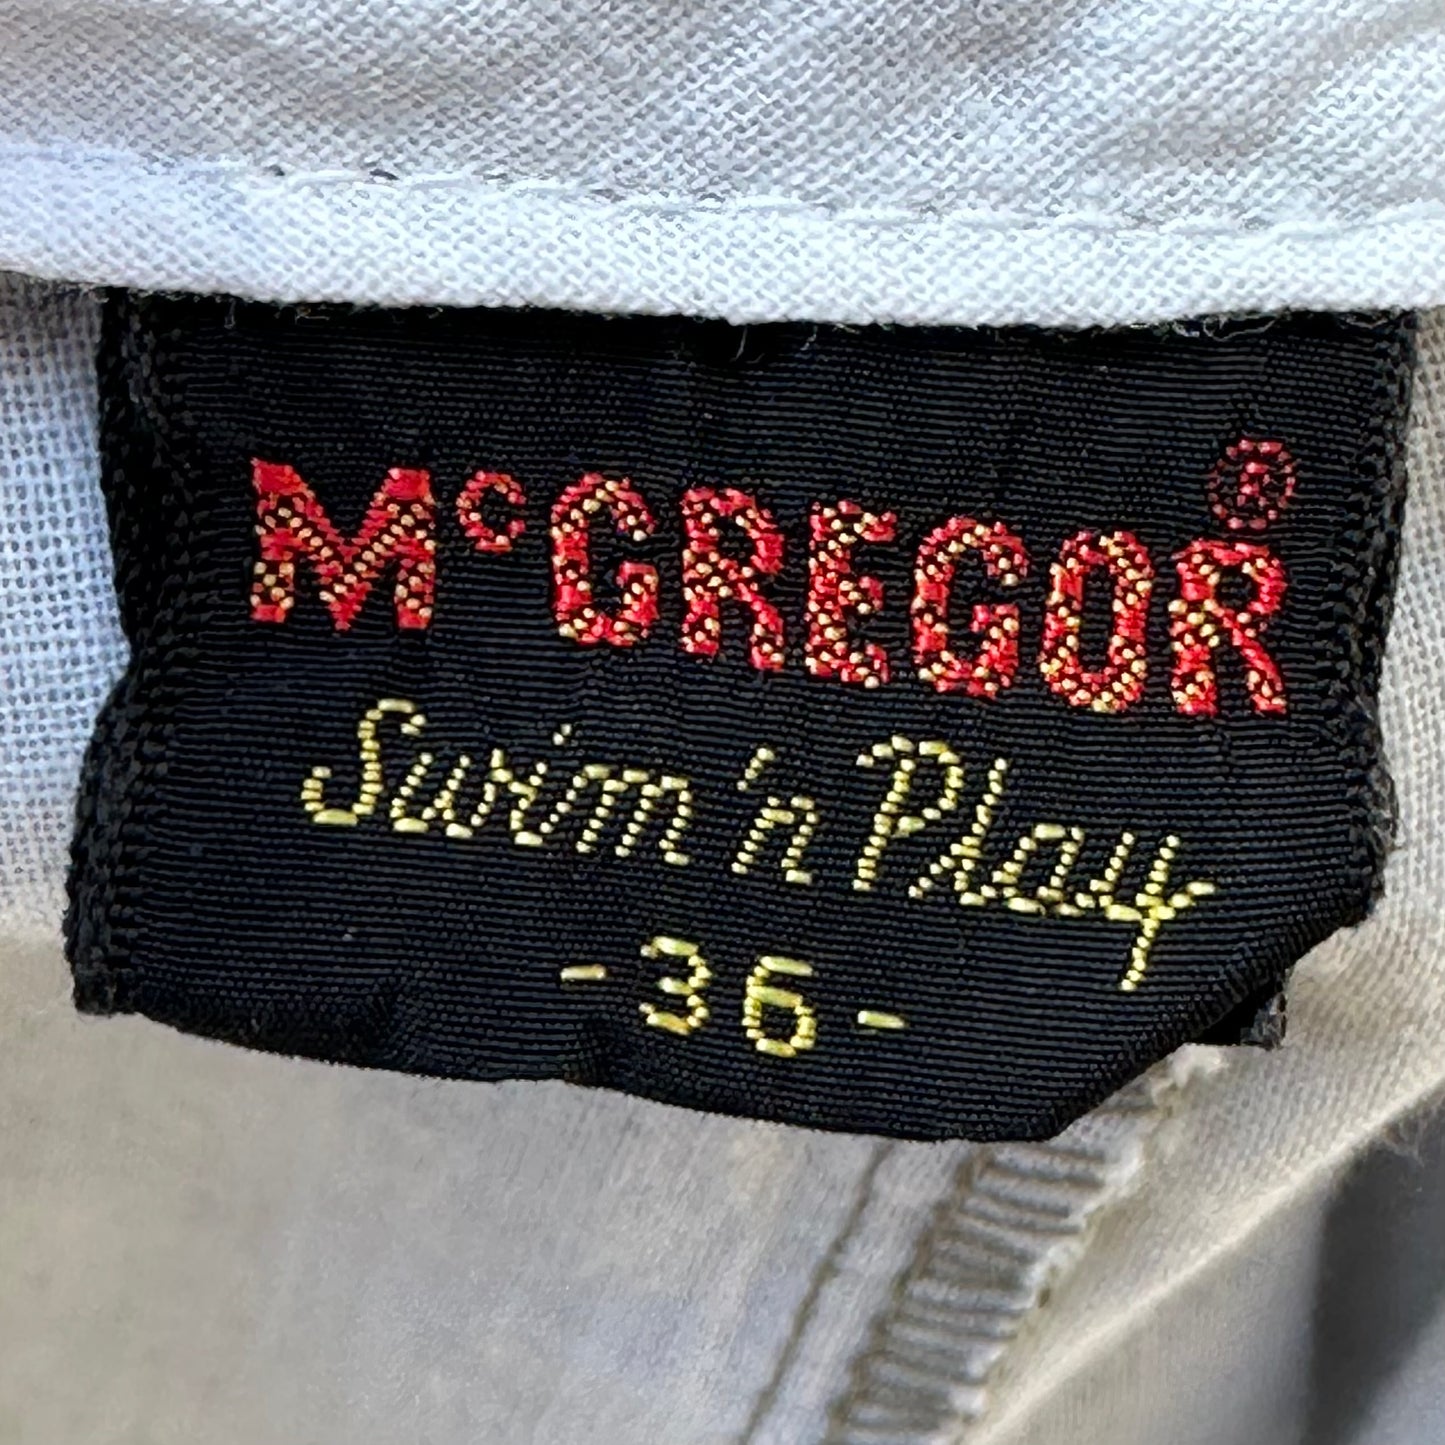 1960s Men’s Khaki Shorts, McGregor Swim ‘n Play Size Medium, New Old Stock with Tag